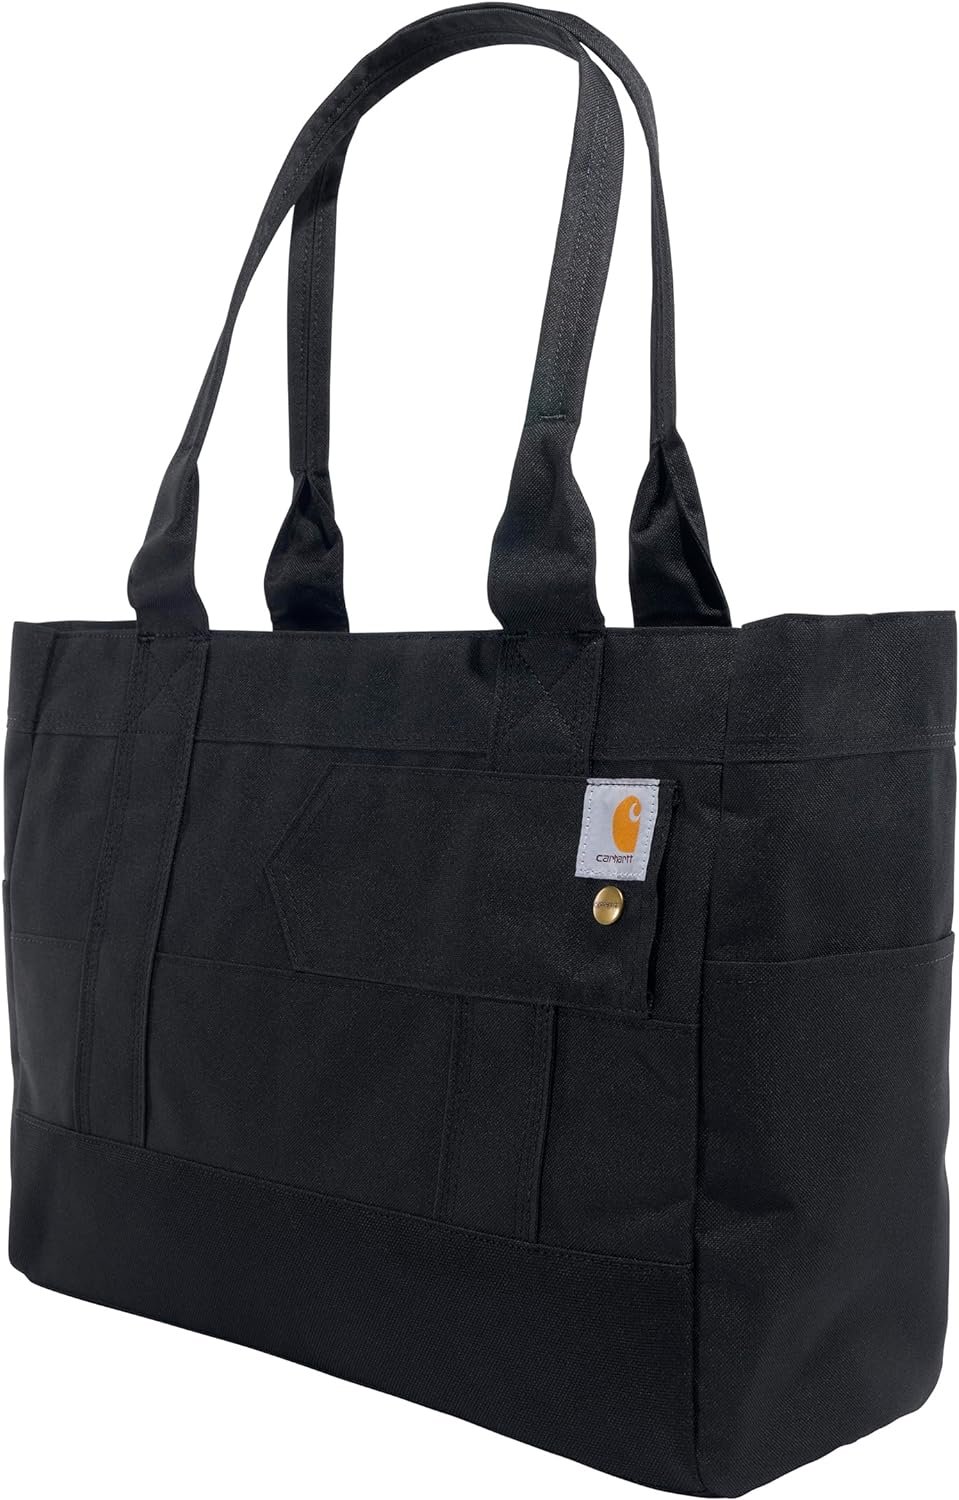 Carhartt Horizontal Zip, Durable Water-Resistant Tote Bag with Zipper Closure